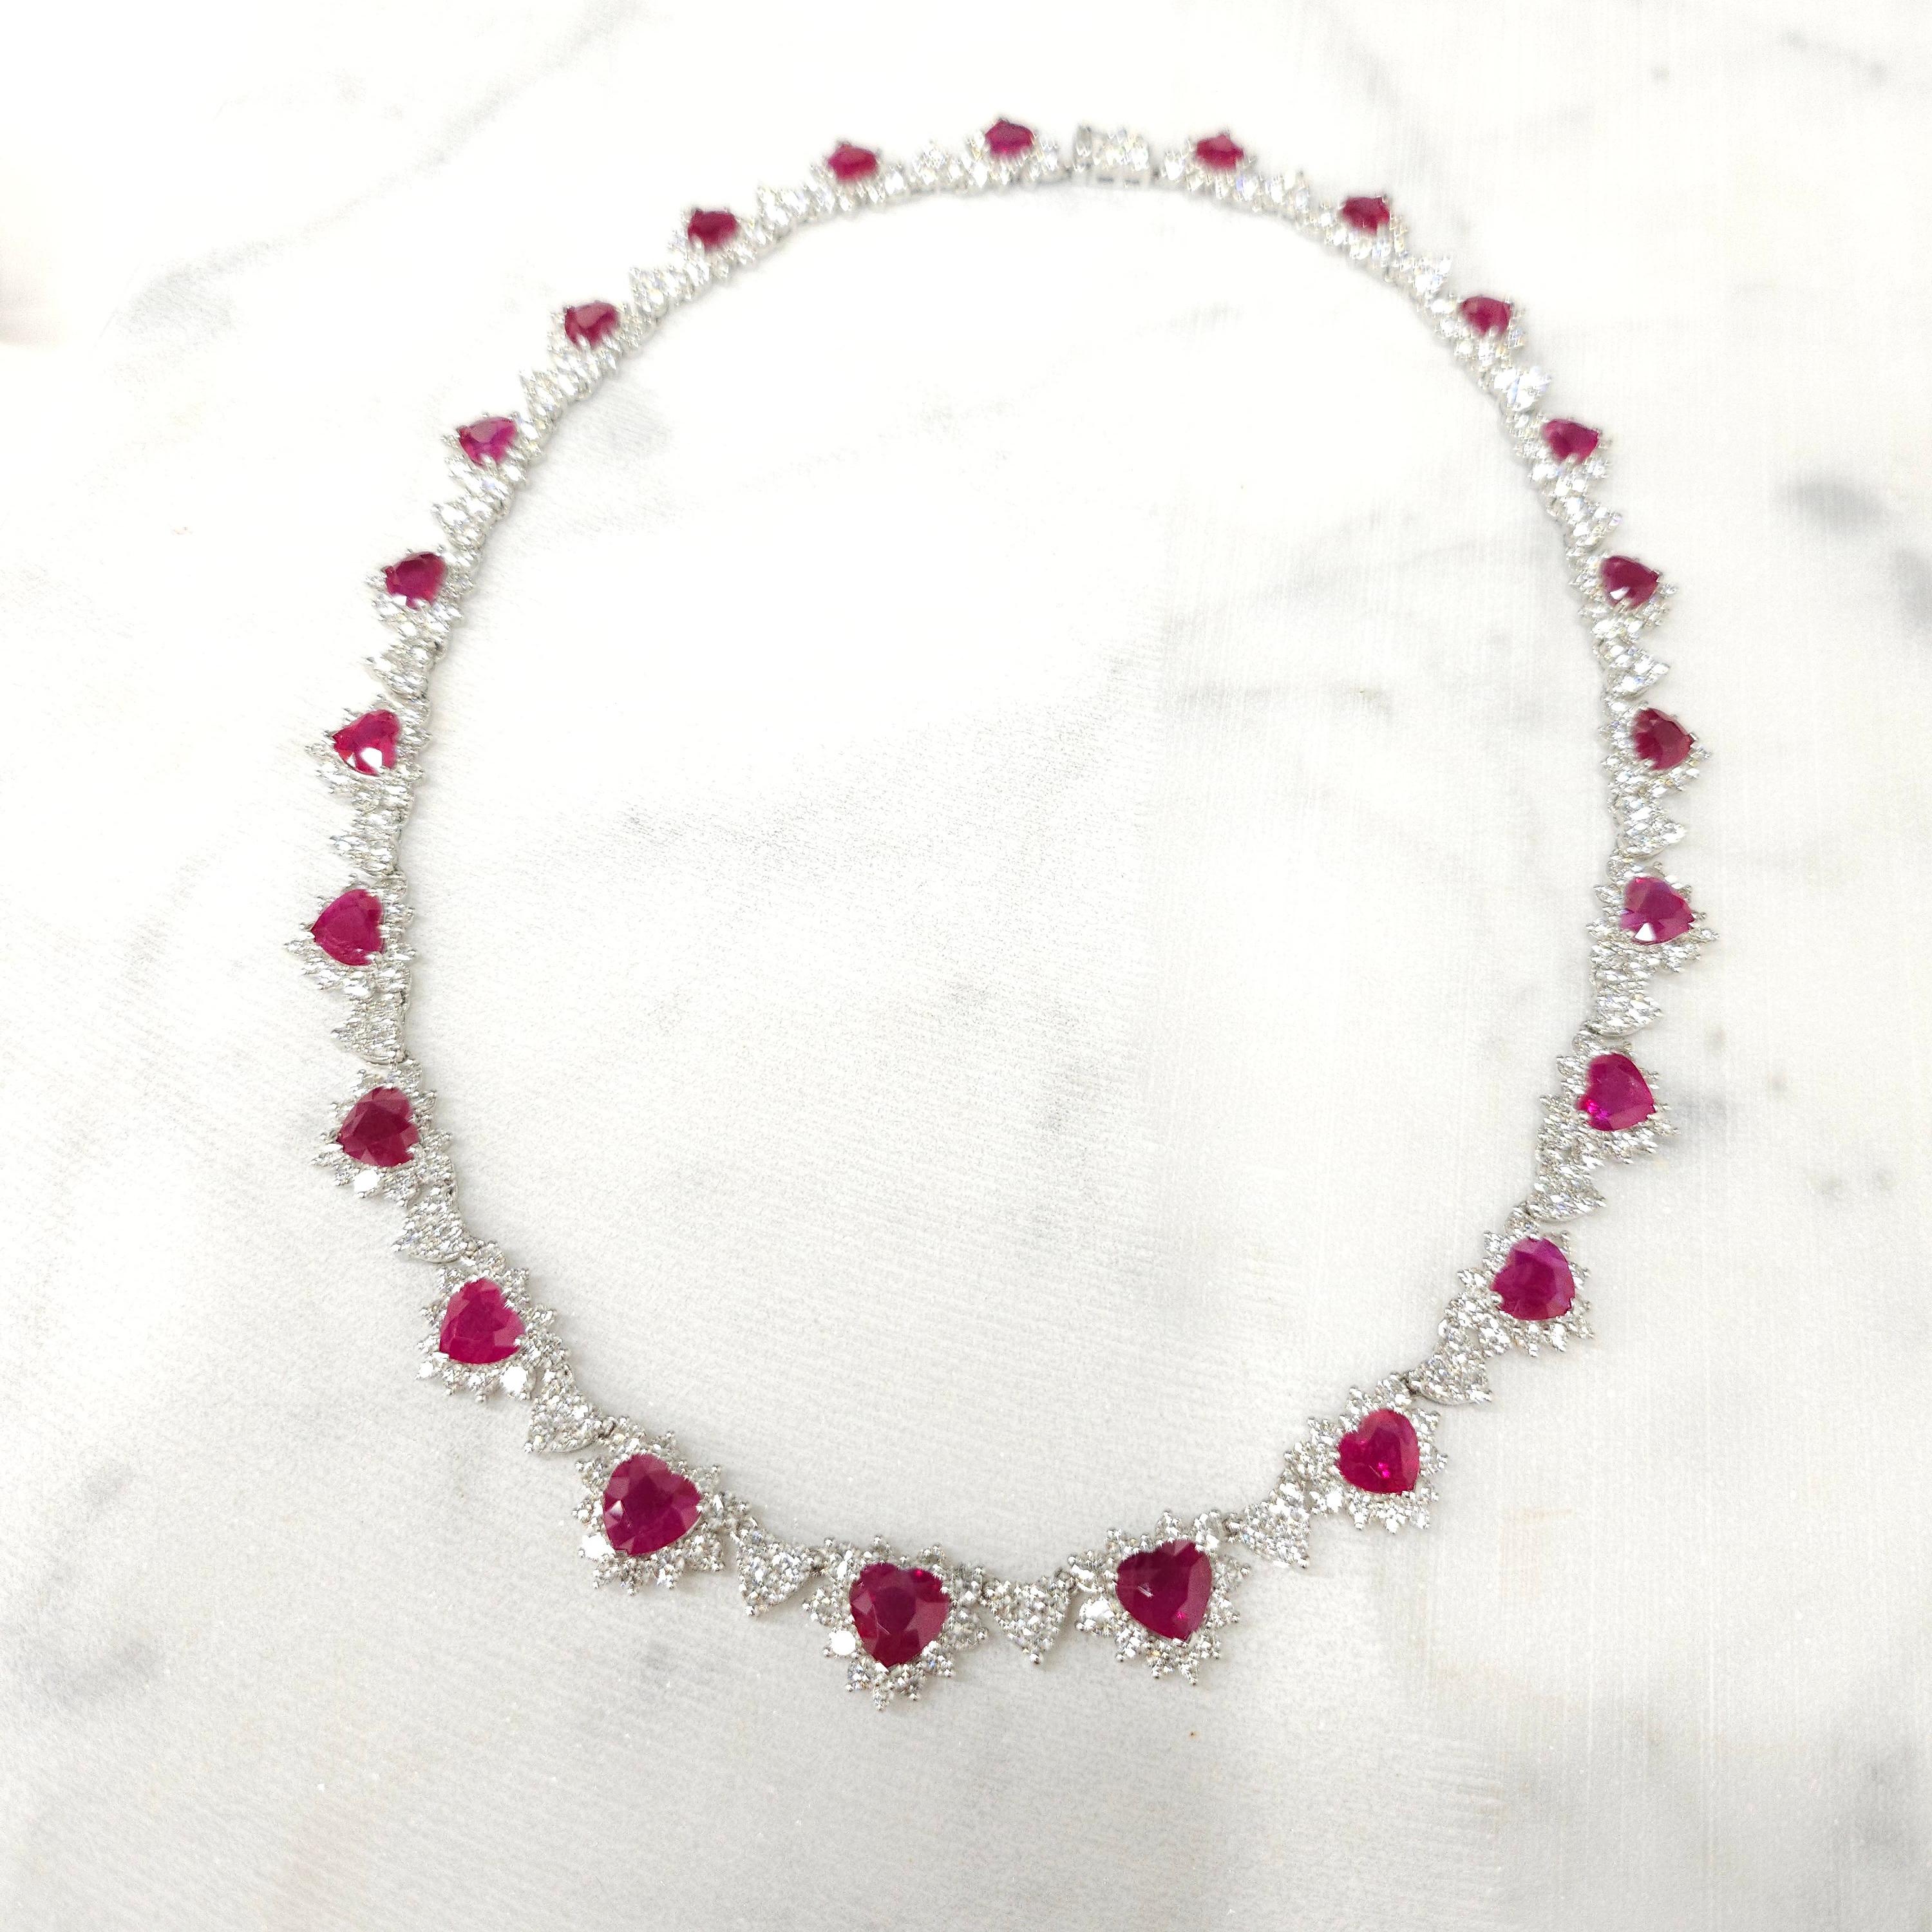 IGI Certified 26.58 Carat Burma Ruby & 18.85 Carat Diamond Necklace in 18K Gold For Sale 11